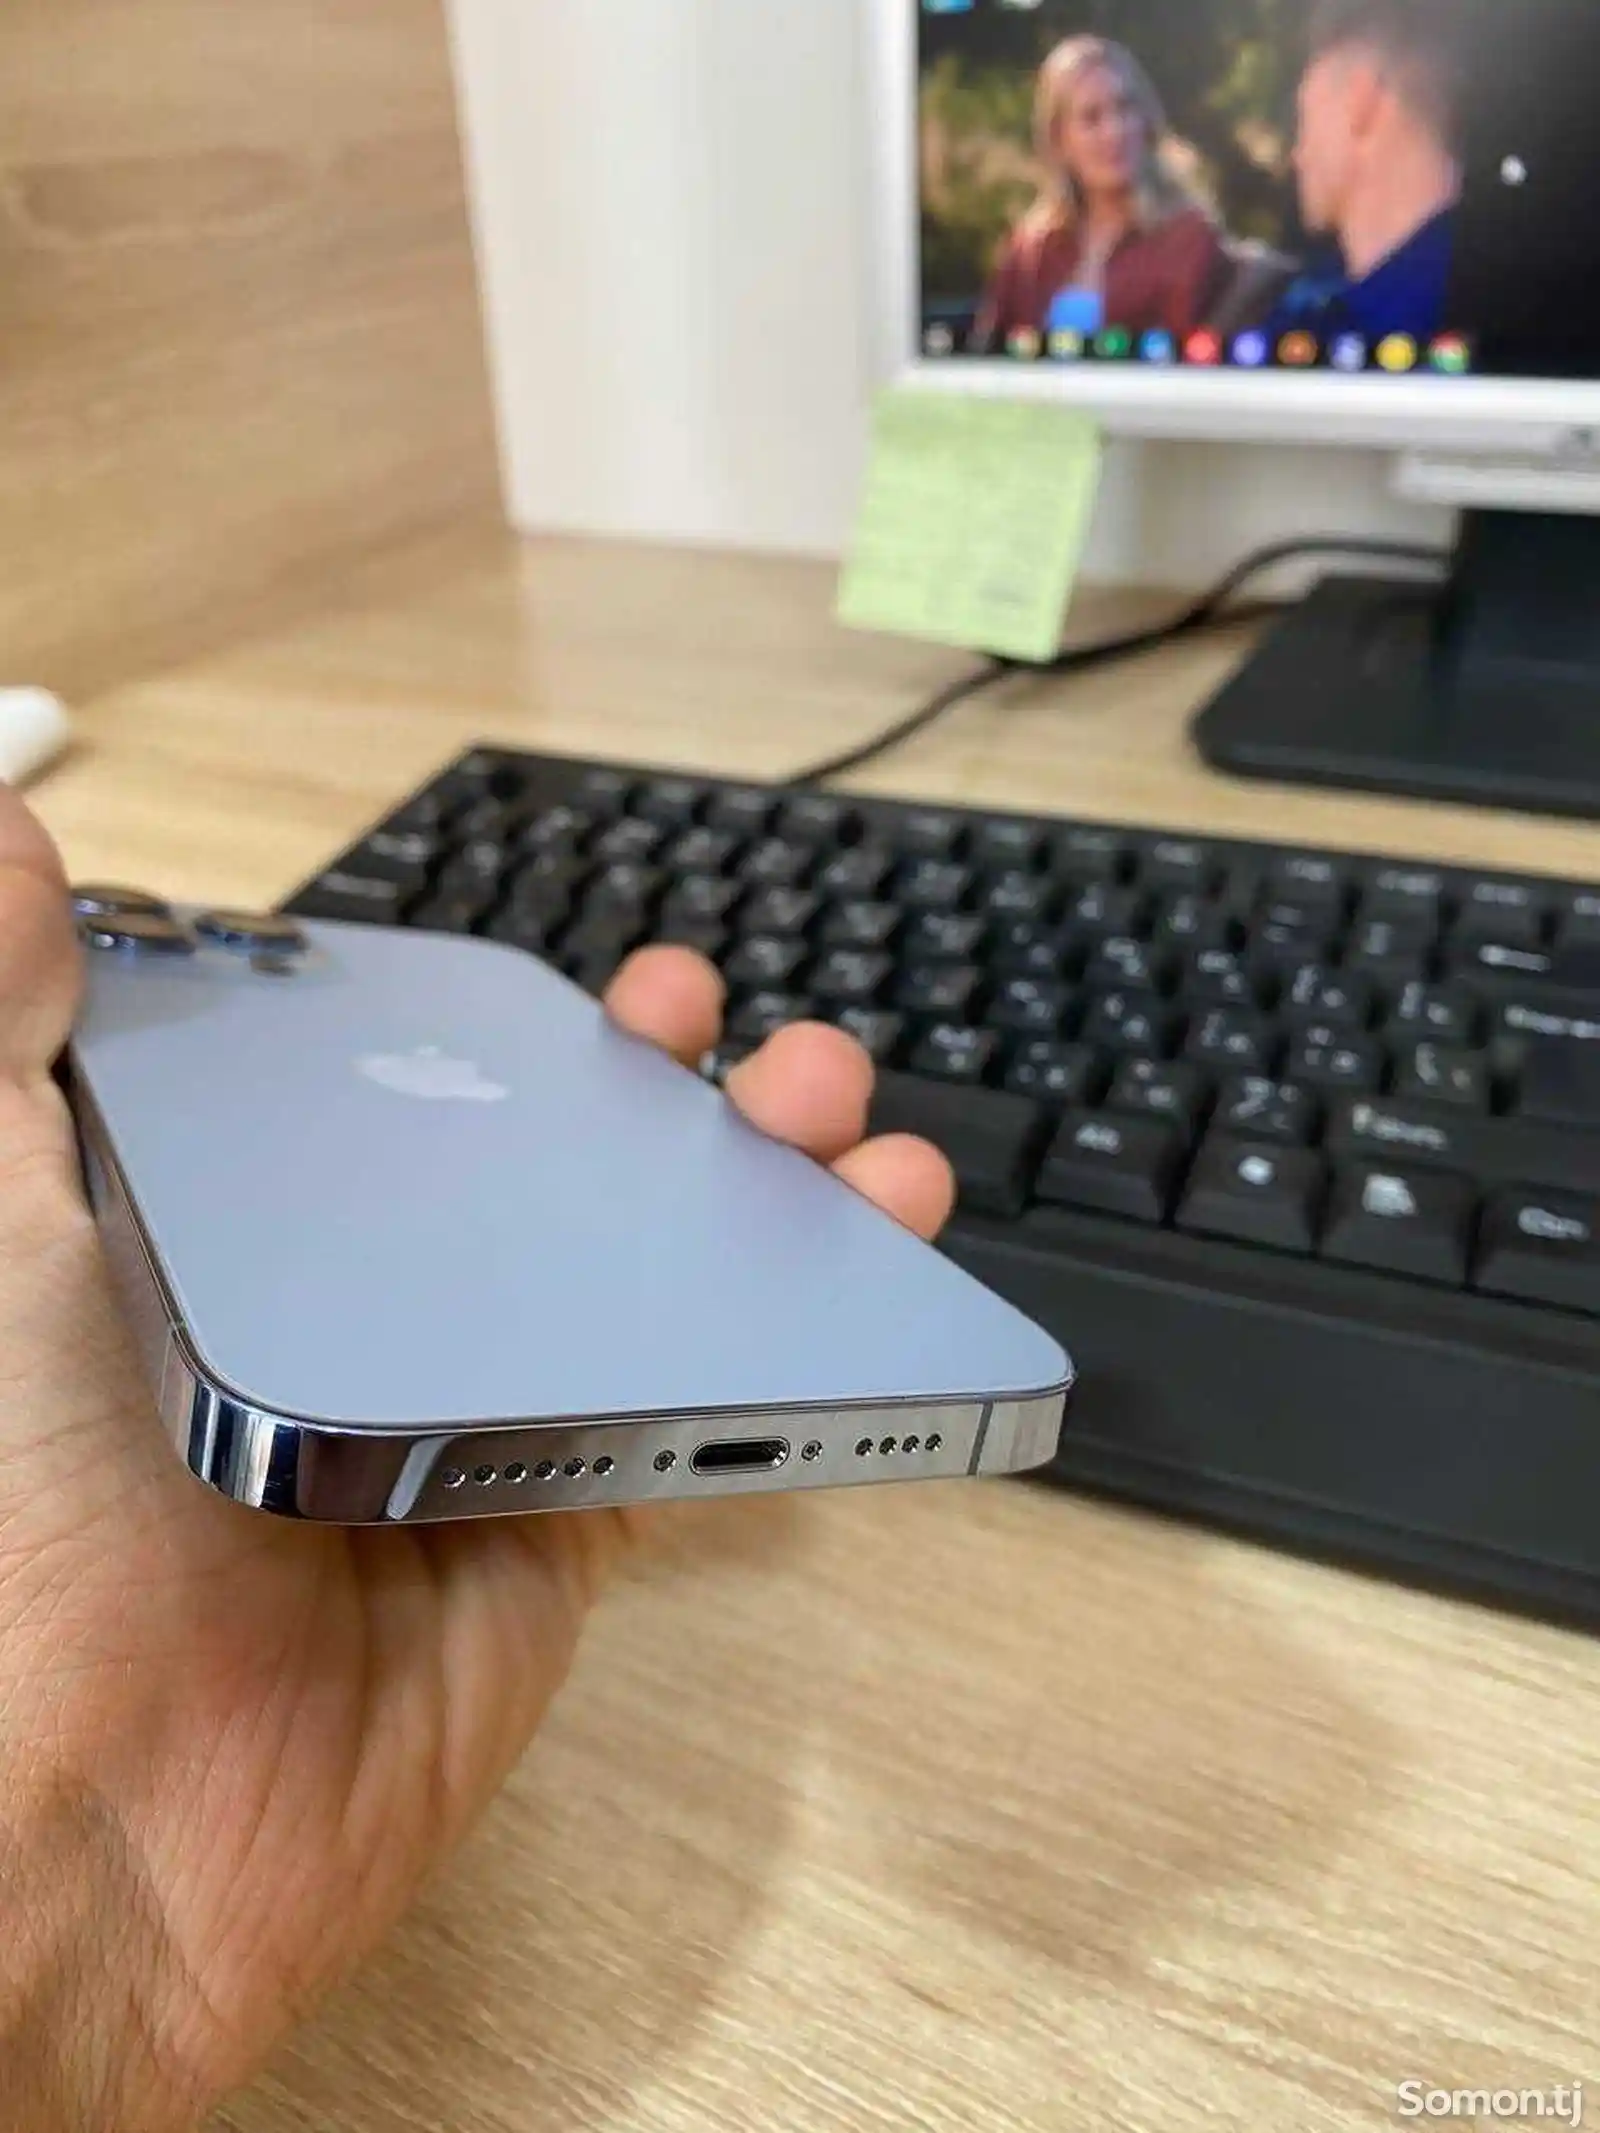 Apple iPhone 13 Pro Max, 256 gb, Sierra Blue-2